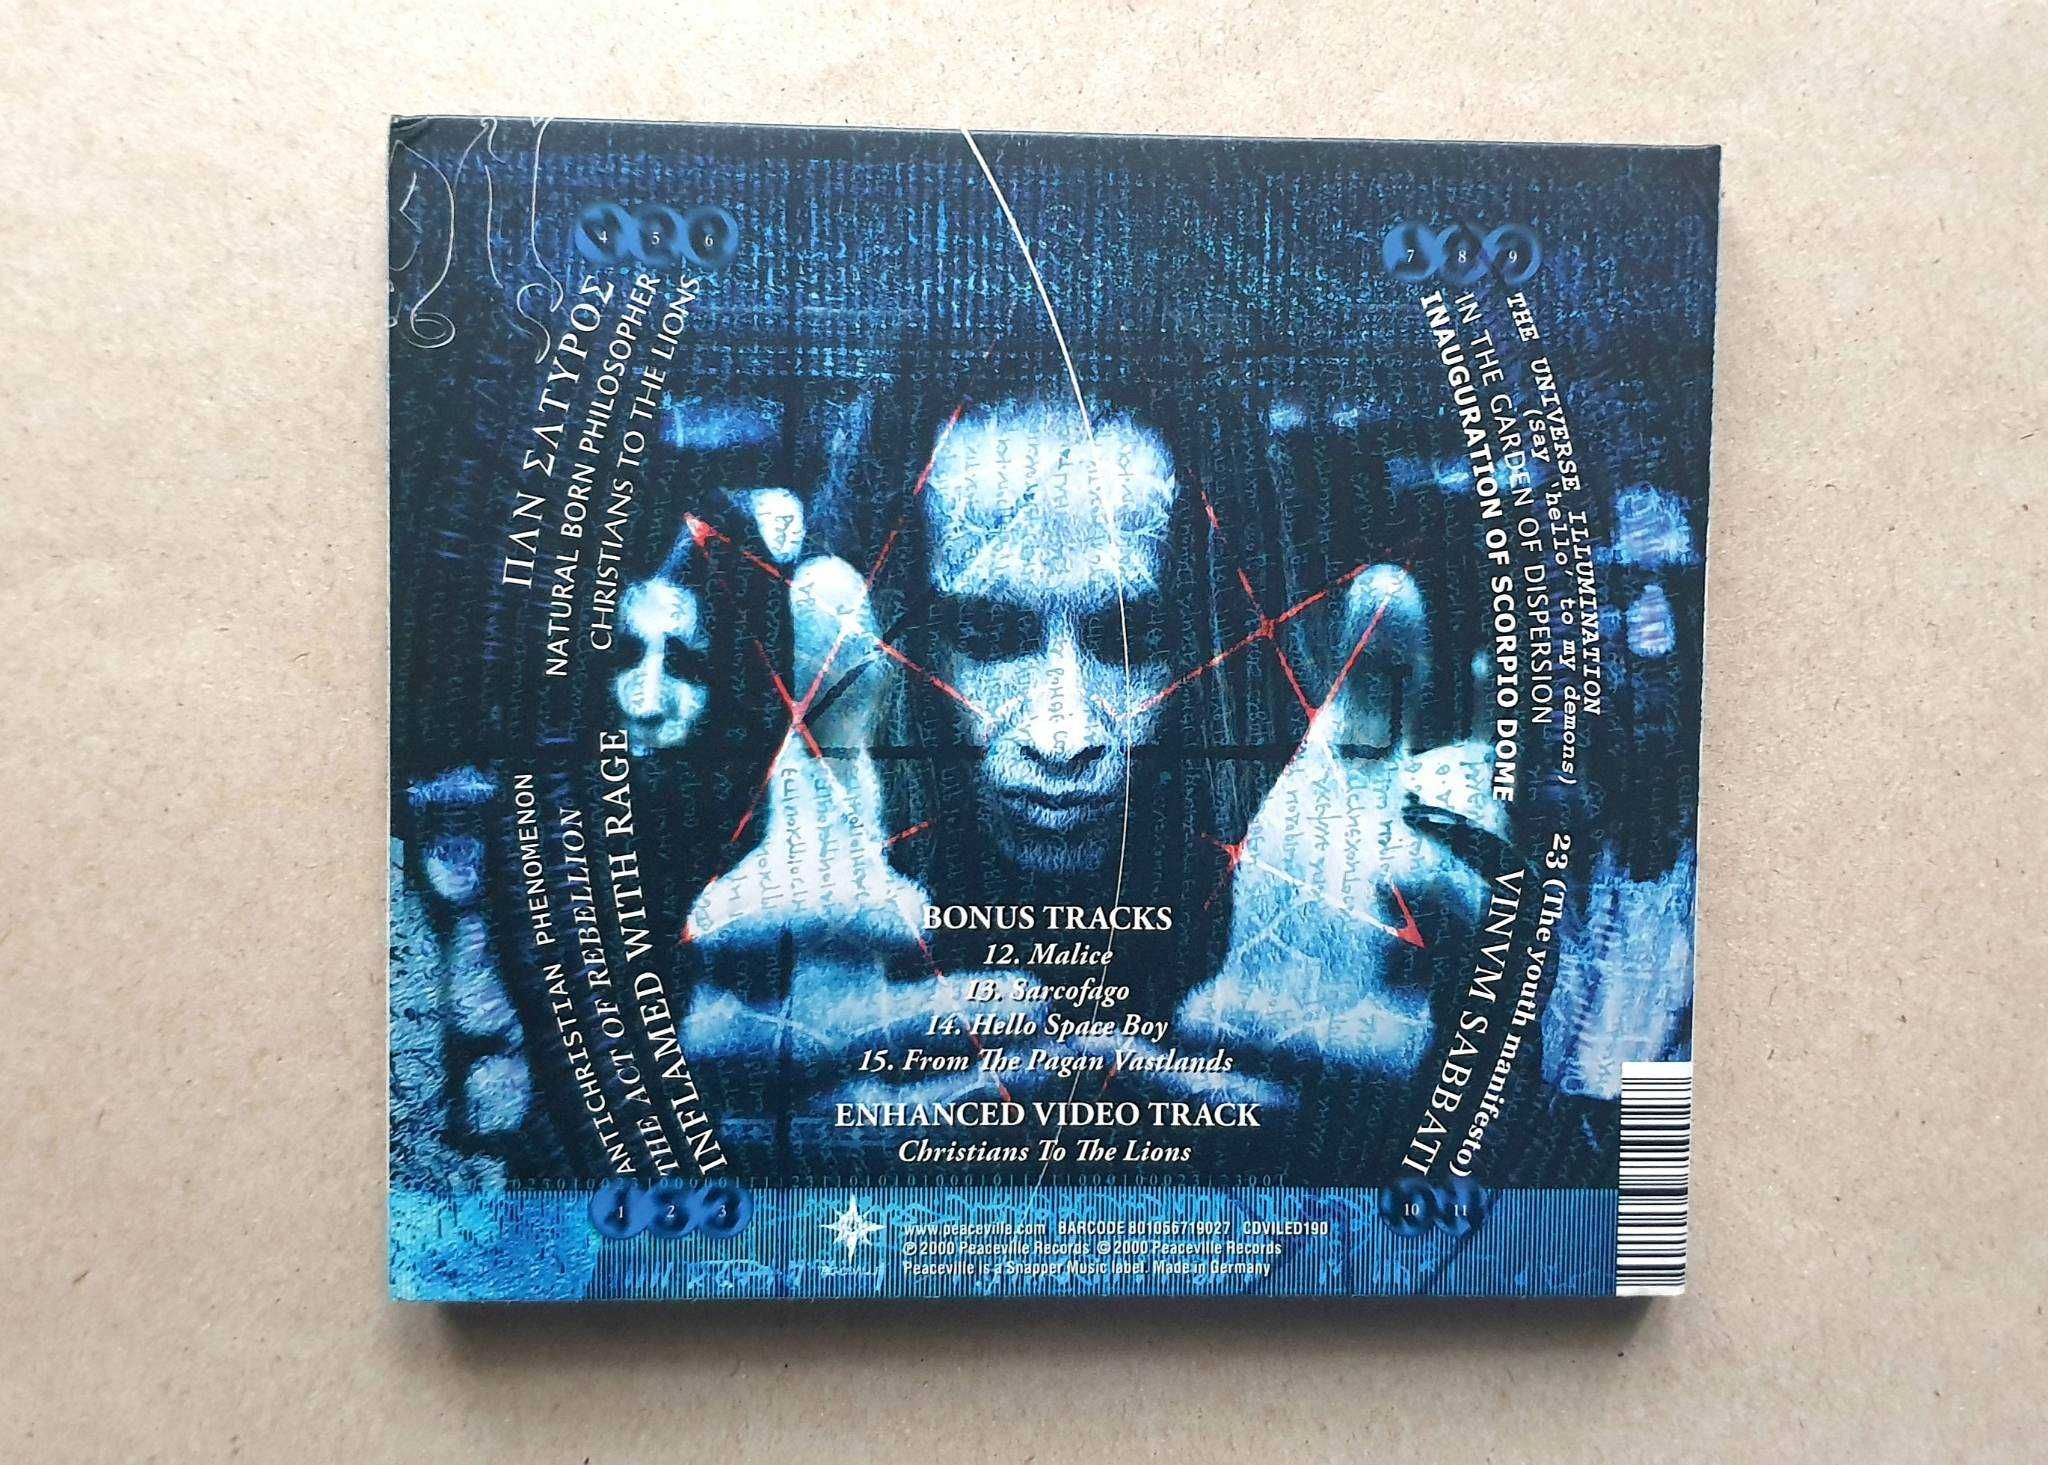 Behemoth Thelema.6 CD metal rock